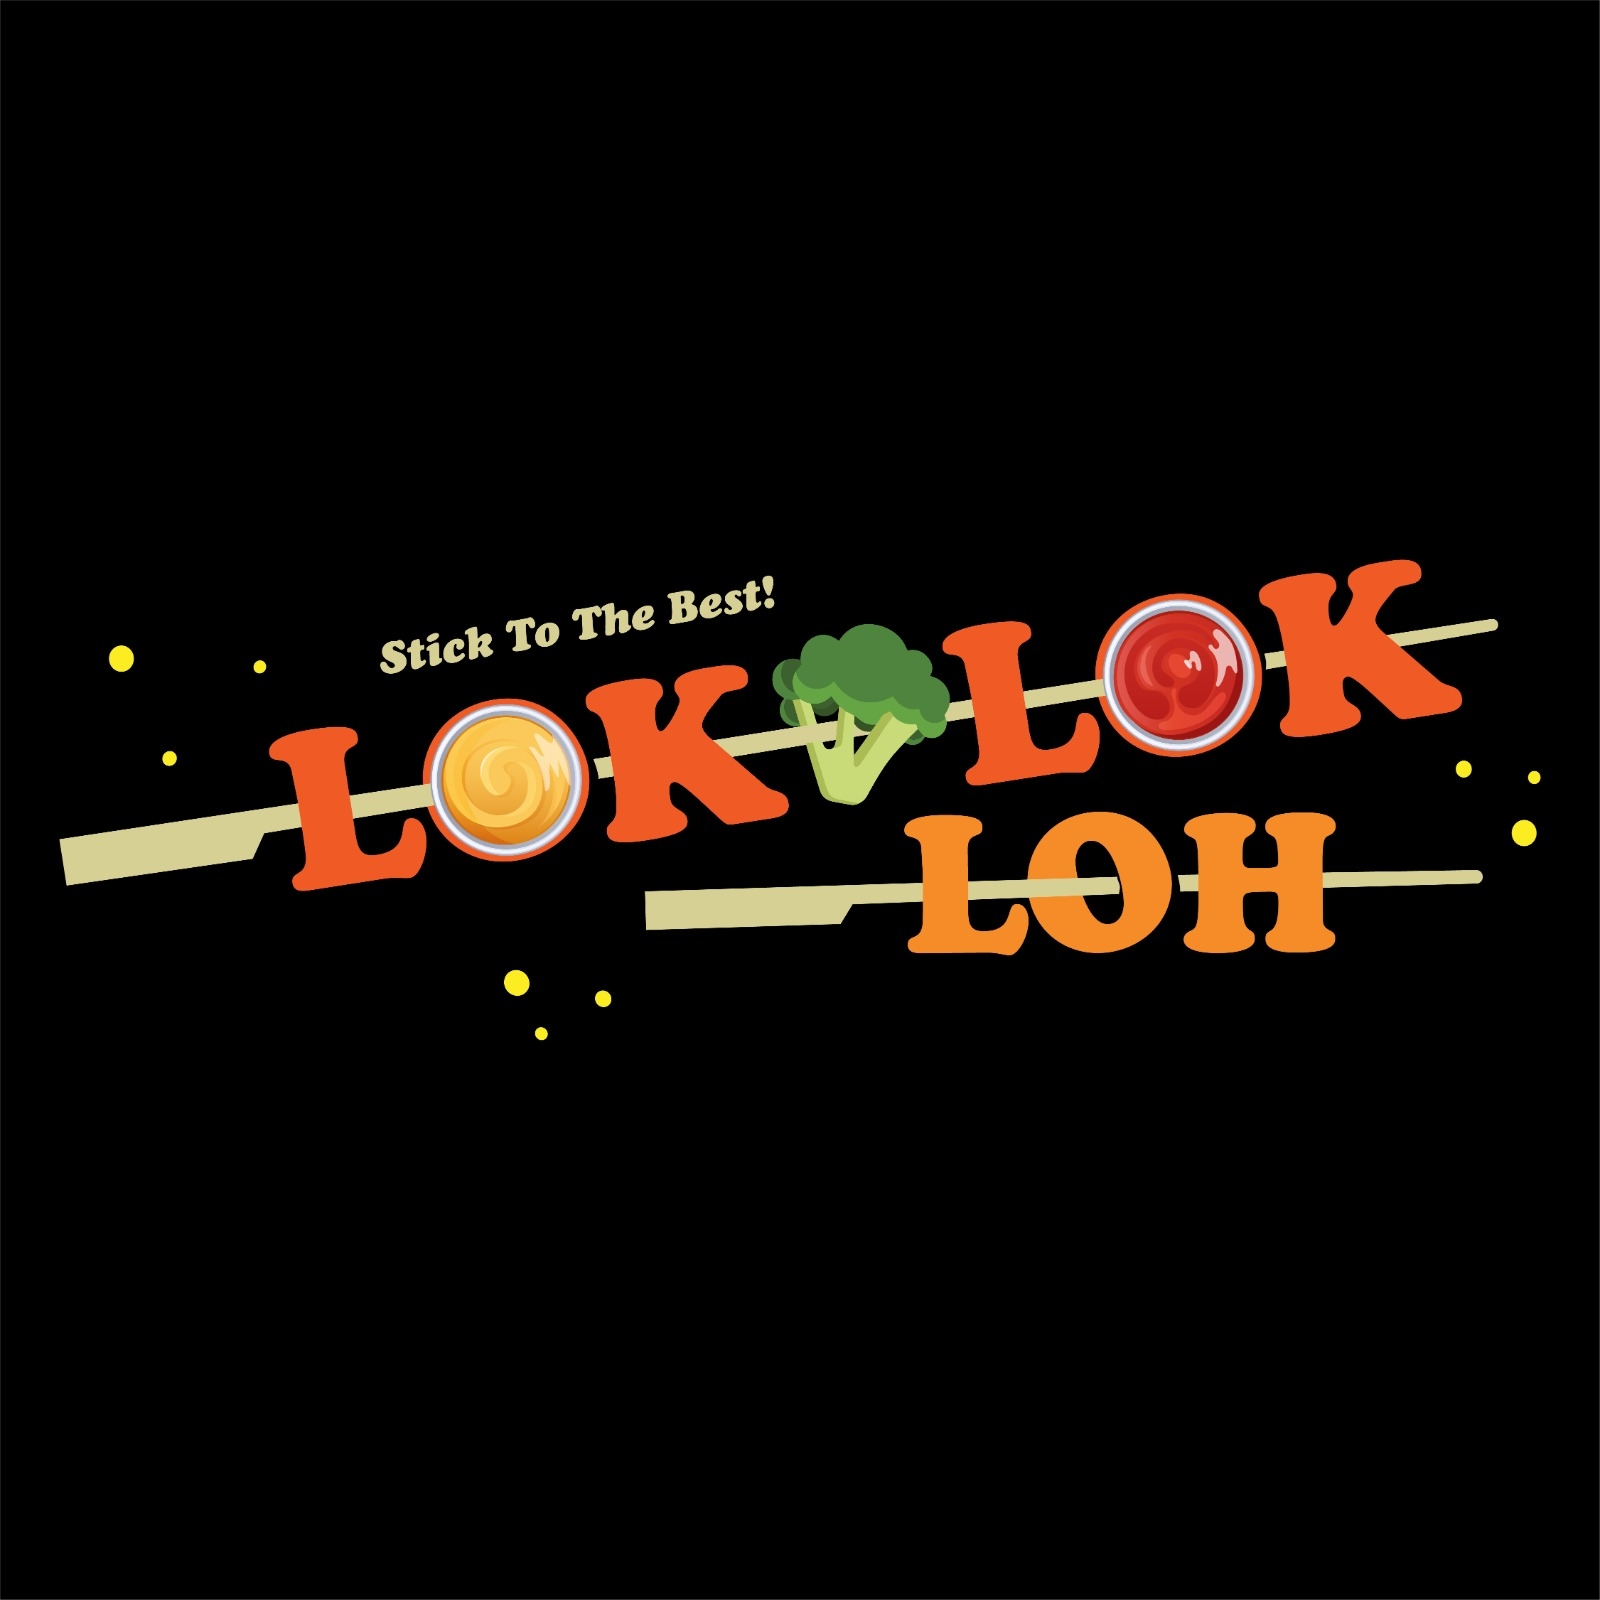 LOK LOK LOH - Logo